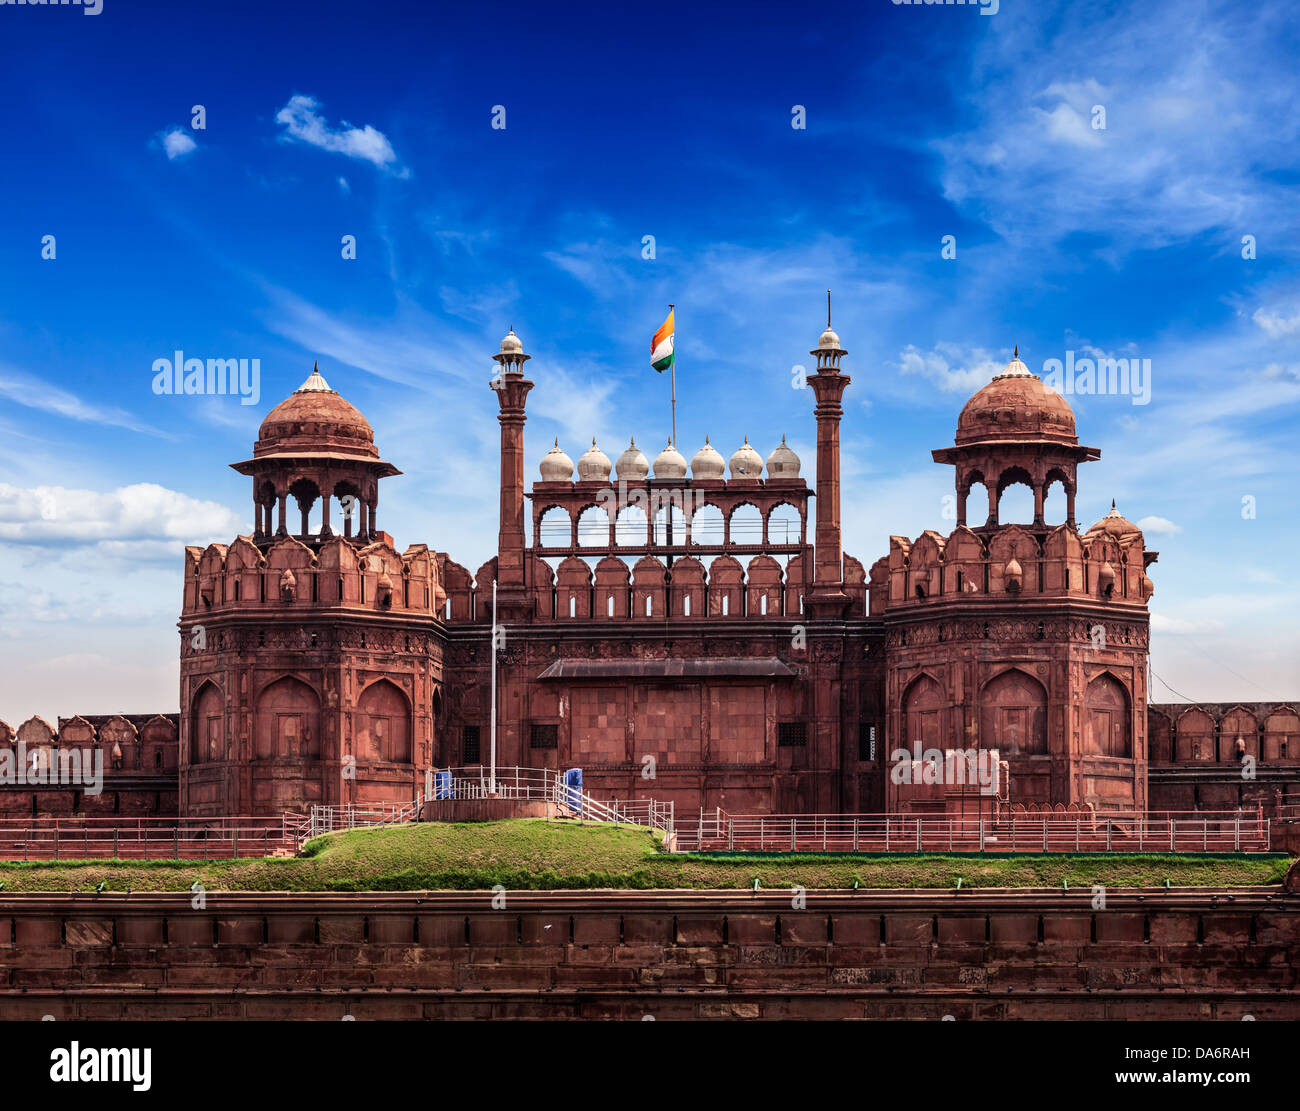 India travel tourism background - Red Fort (Lal Qila) Delhi - World Heritage Site. Delhi, India Stock Photo